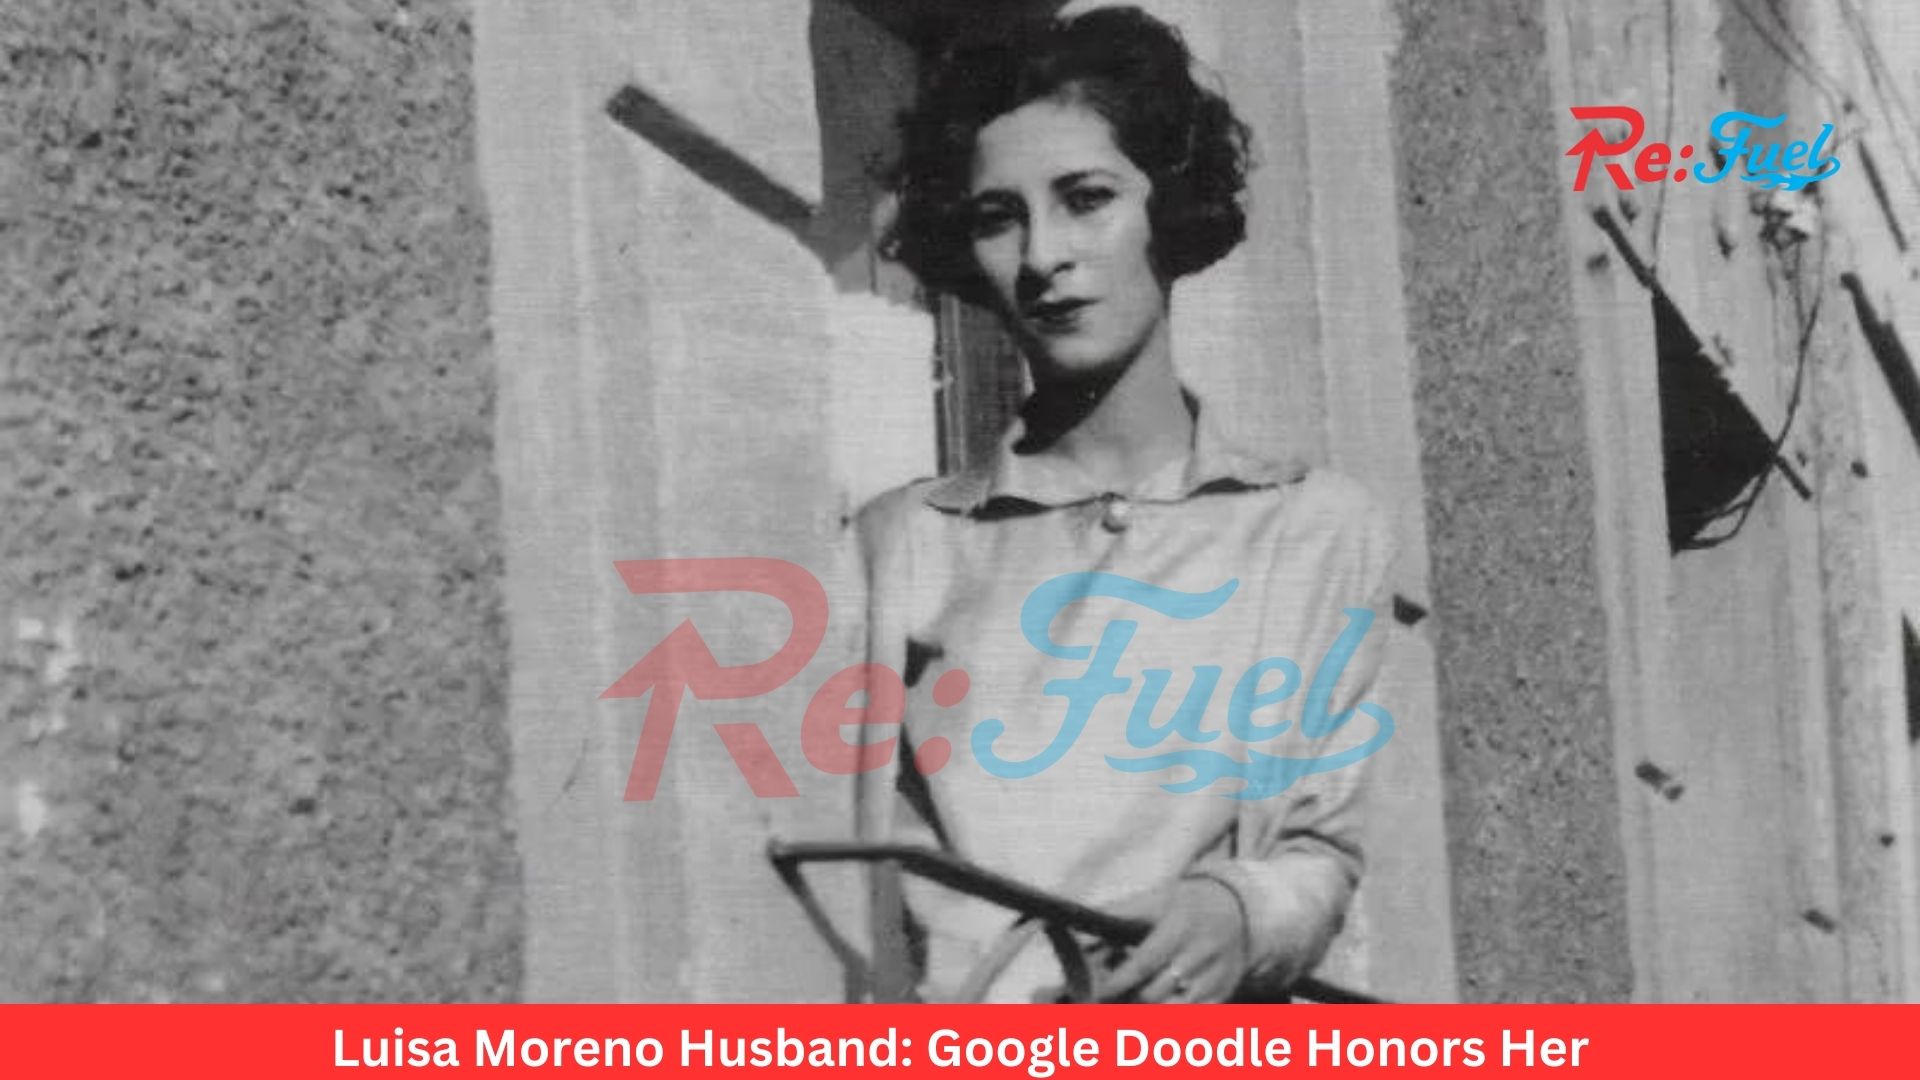 Luisa Moreno Husband: Google Doodle Honors Her